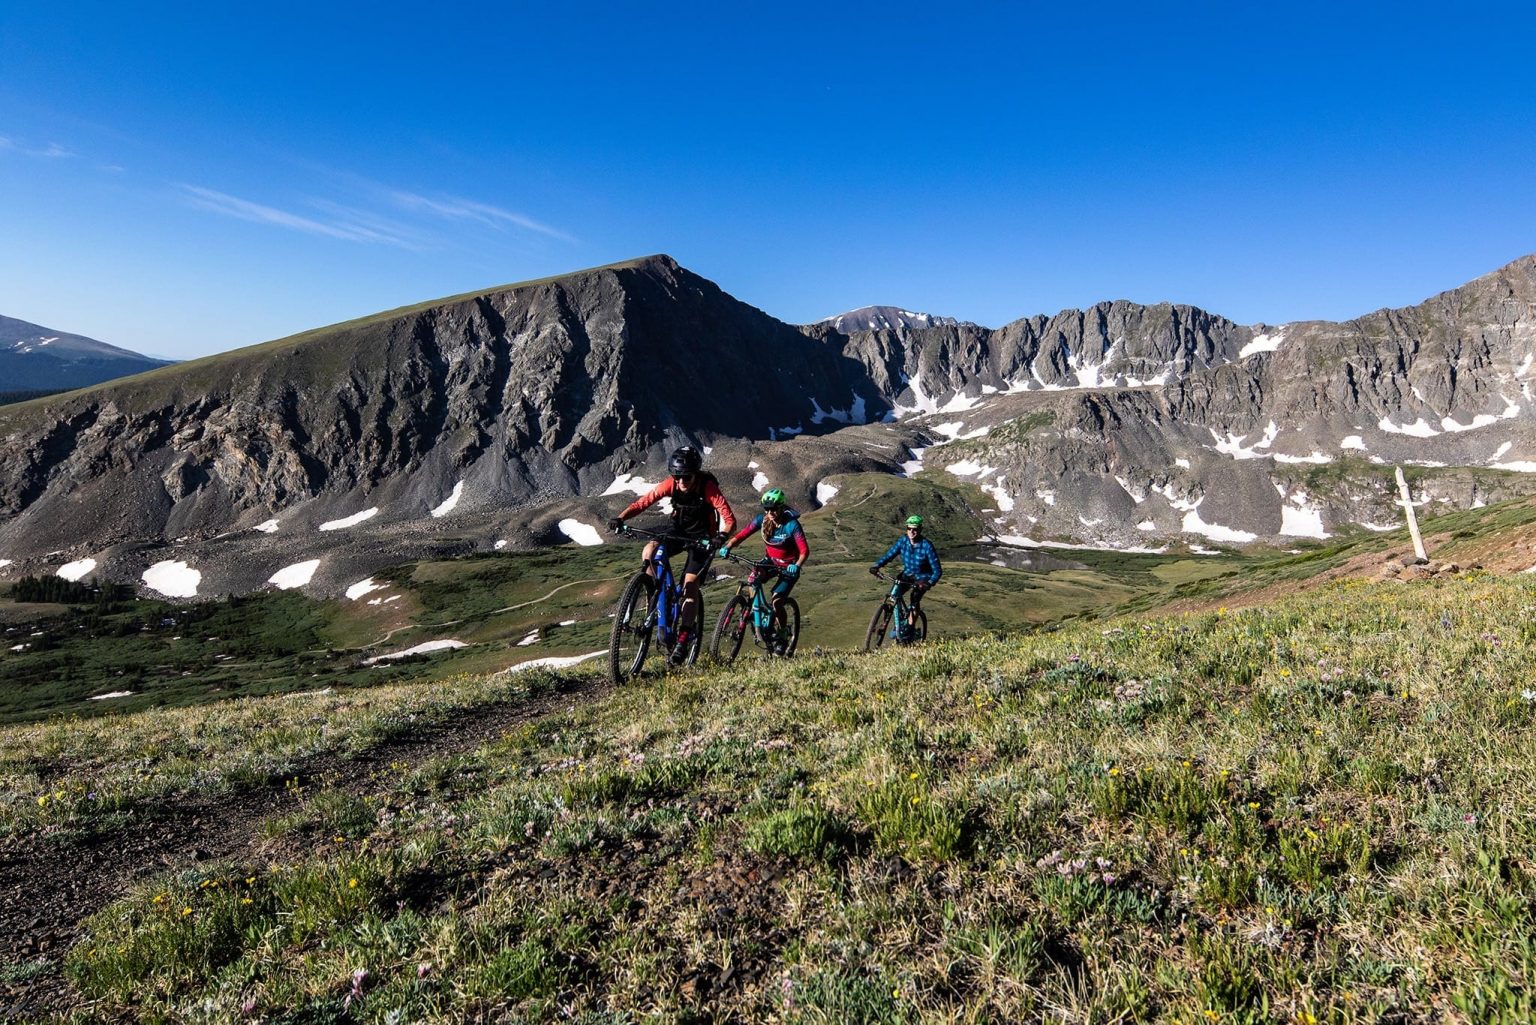 3 people mountain biking on the Wheeler Trail in the summer.